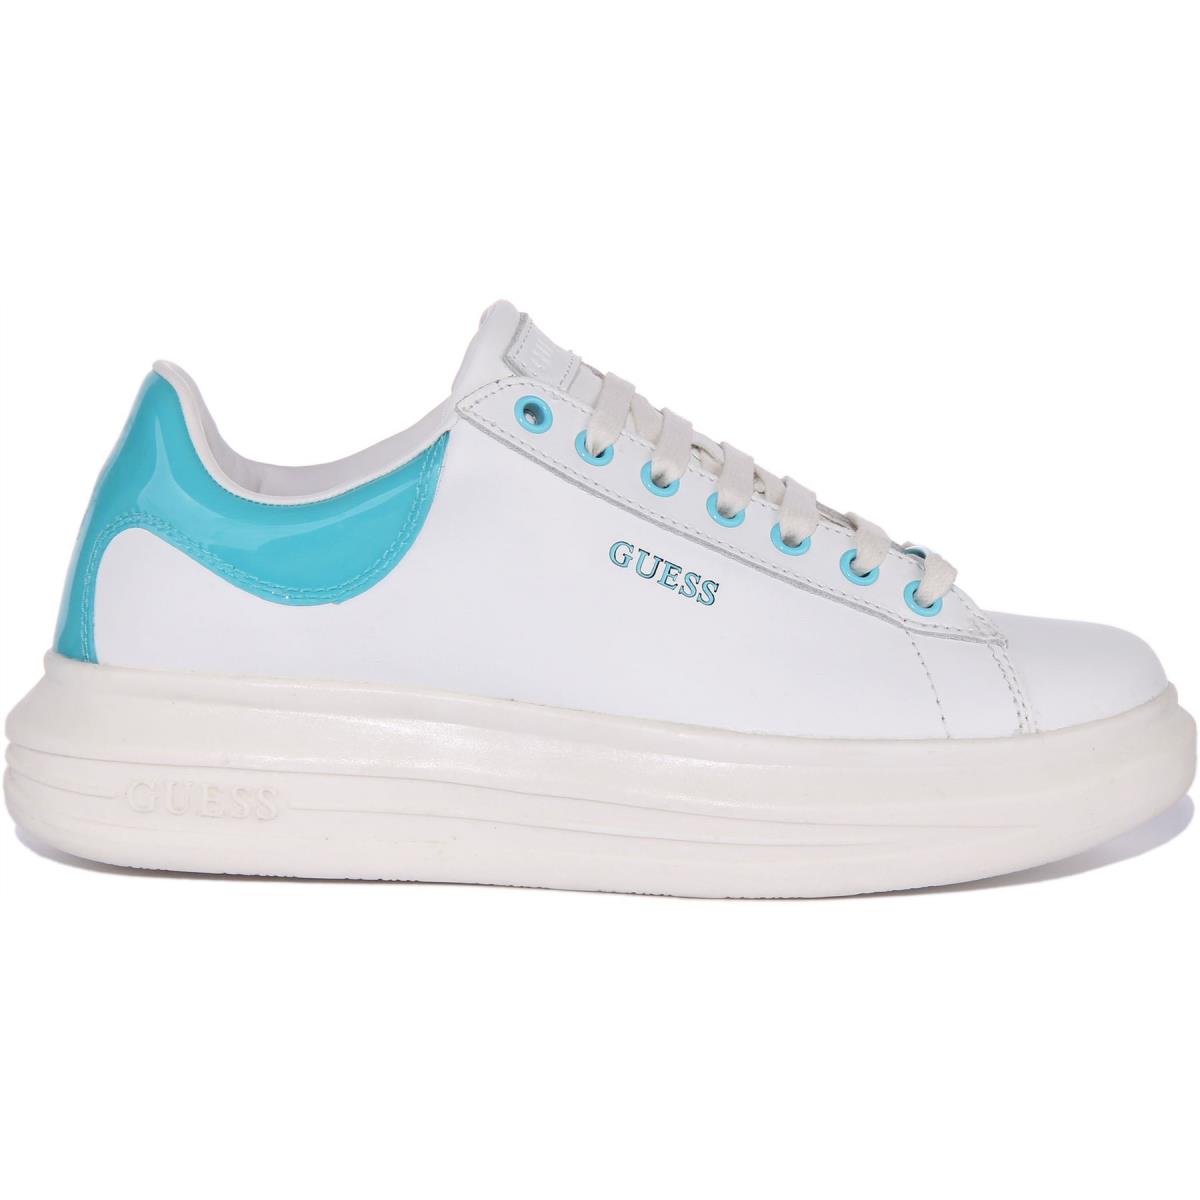 Guess Fl5Viblea12 Vibo Women Leather Blend Sneaker In White Blue Size US 5 - 11